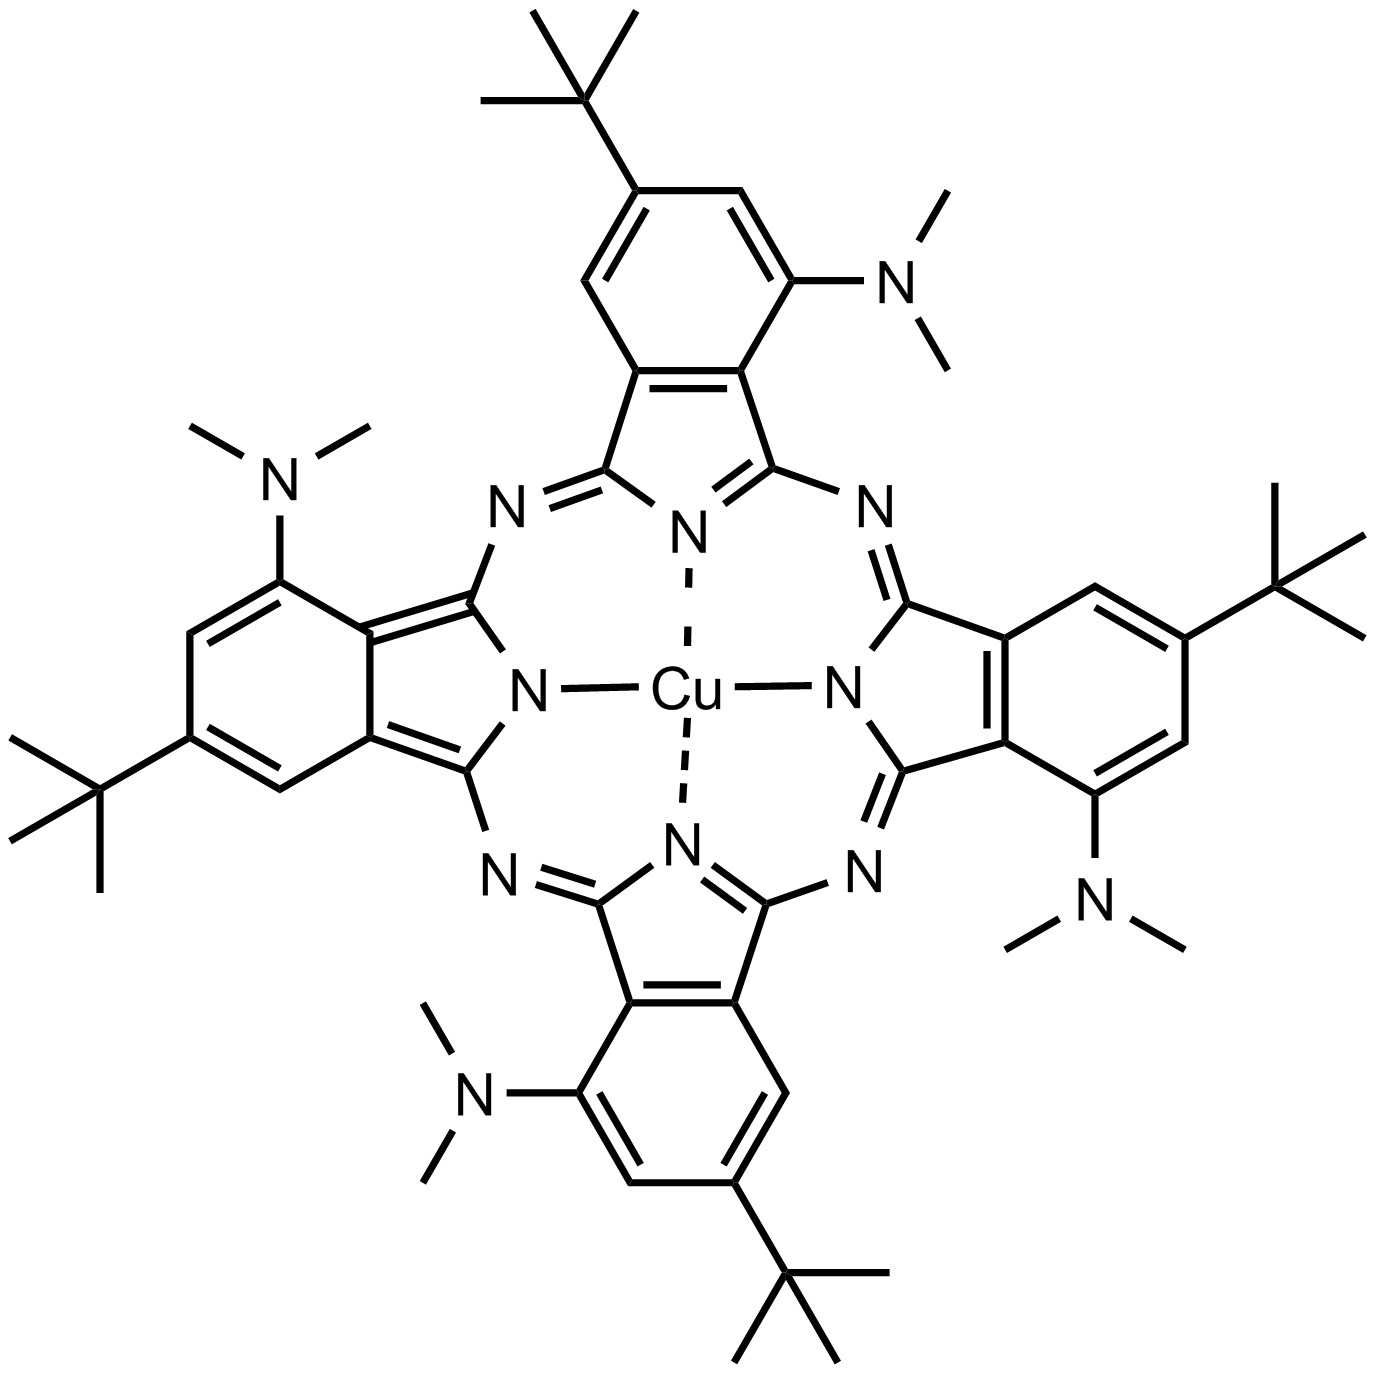 Copper(II) 3,10,17,24-tetra-tert-butyl-1,8,15,22-tetrakis(dimethylamino)-29H,31H-phthalocyanine